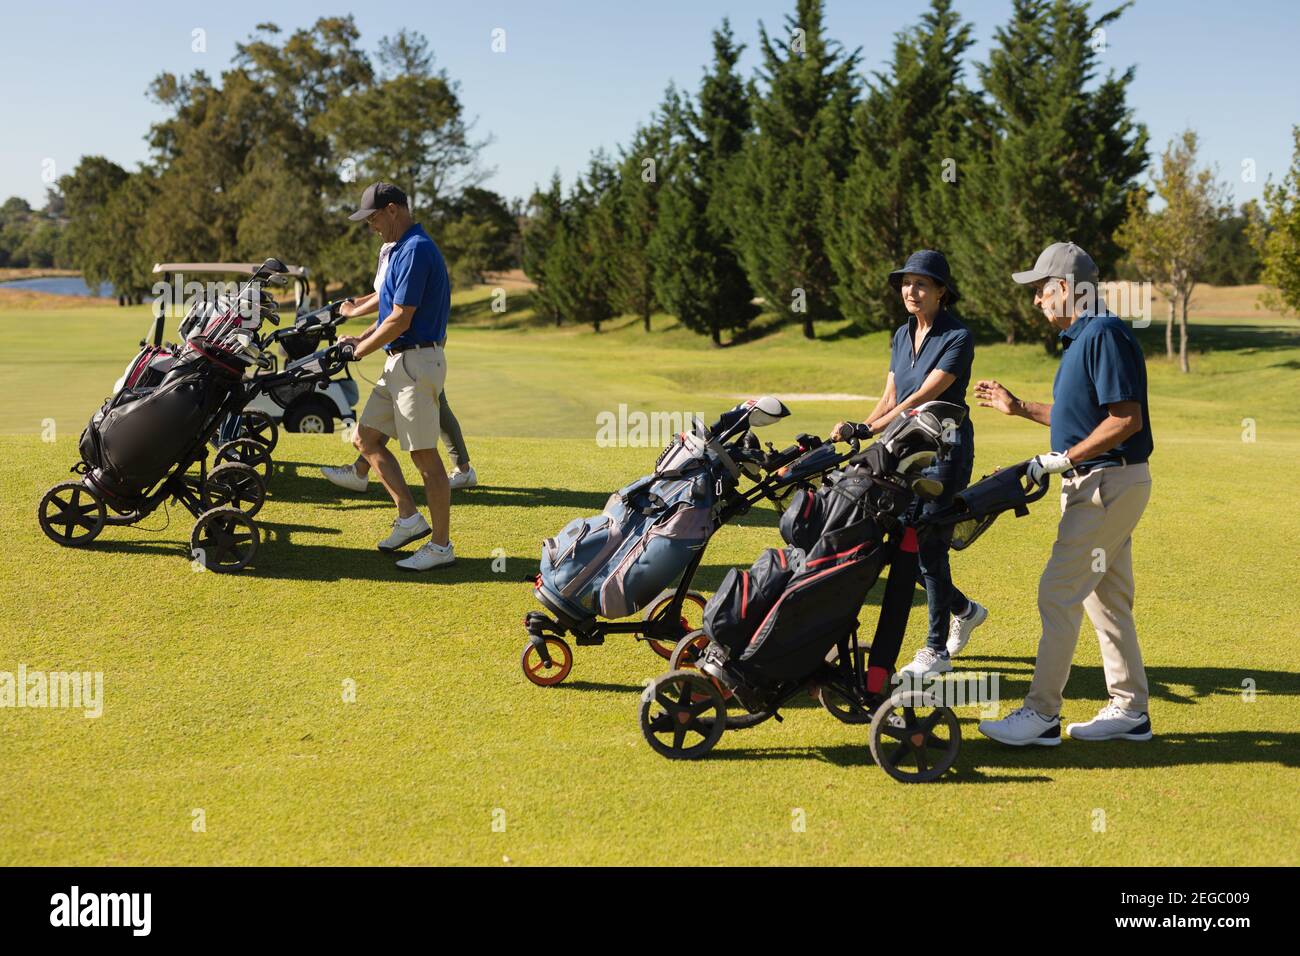 Four caucasian senior men and women walking across golf course holding golf bags Stock Photo